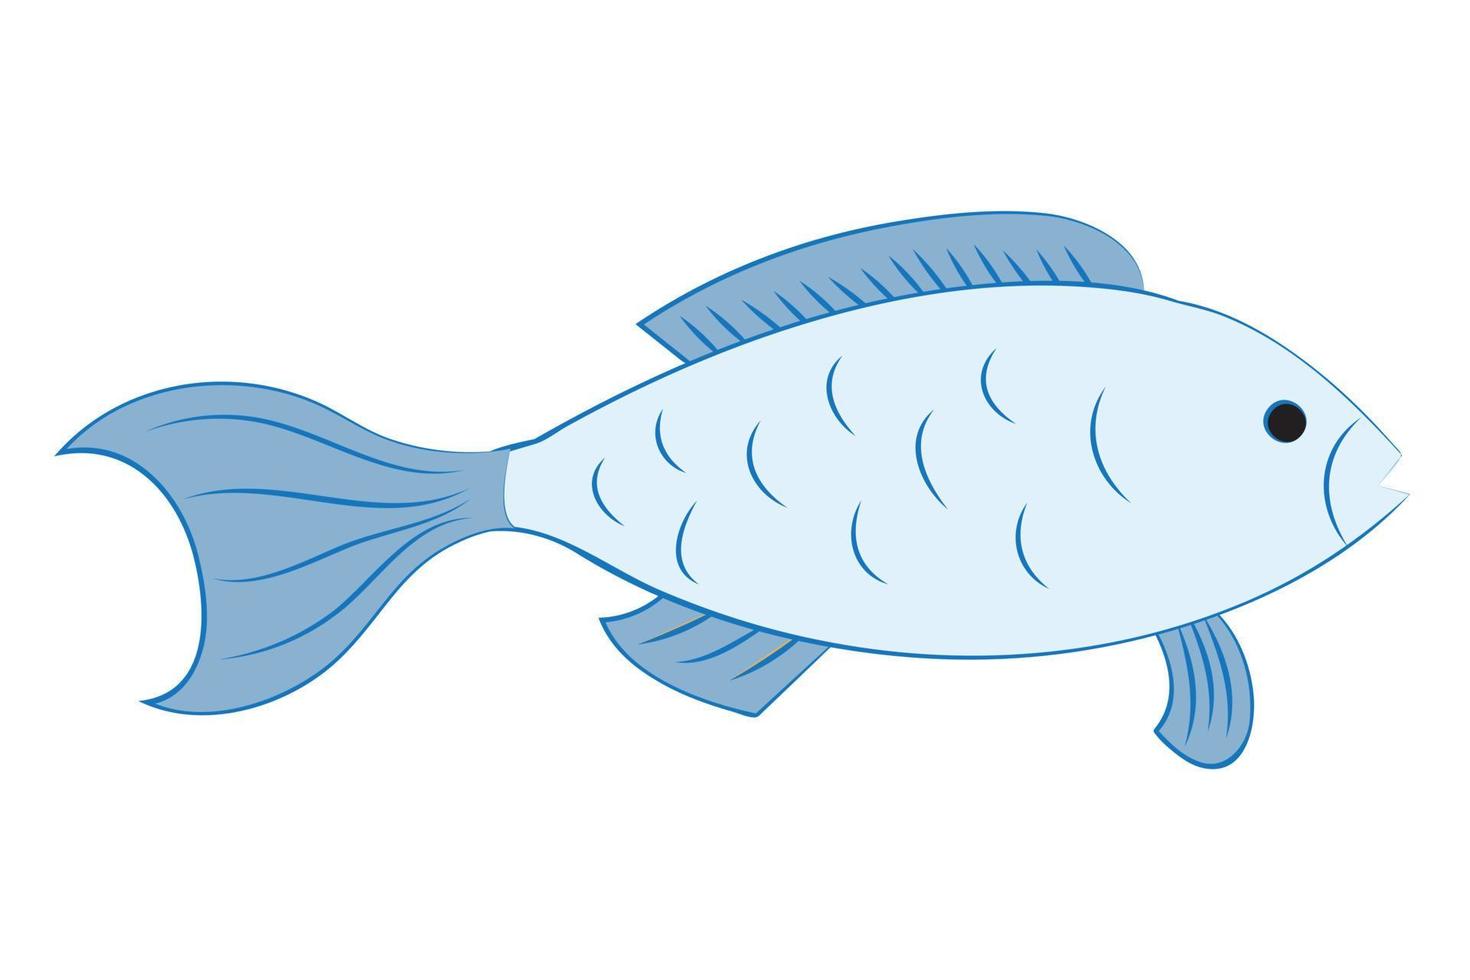 Cute fish in karutun style. Vector illustration.